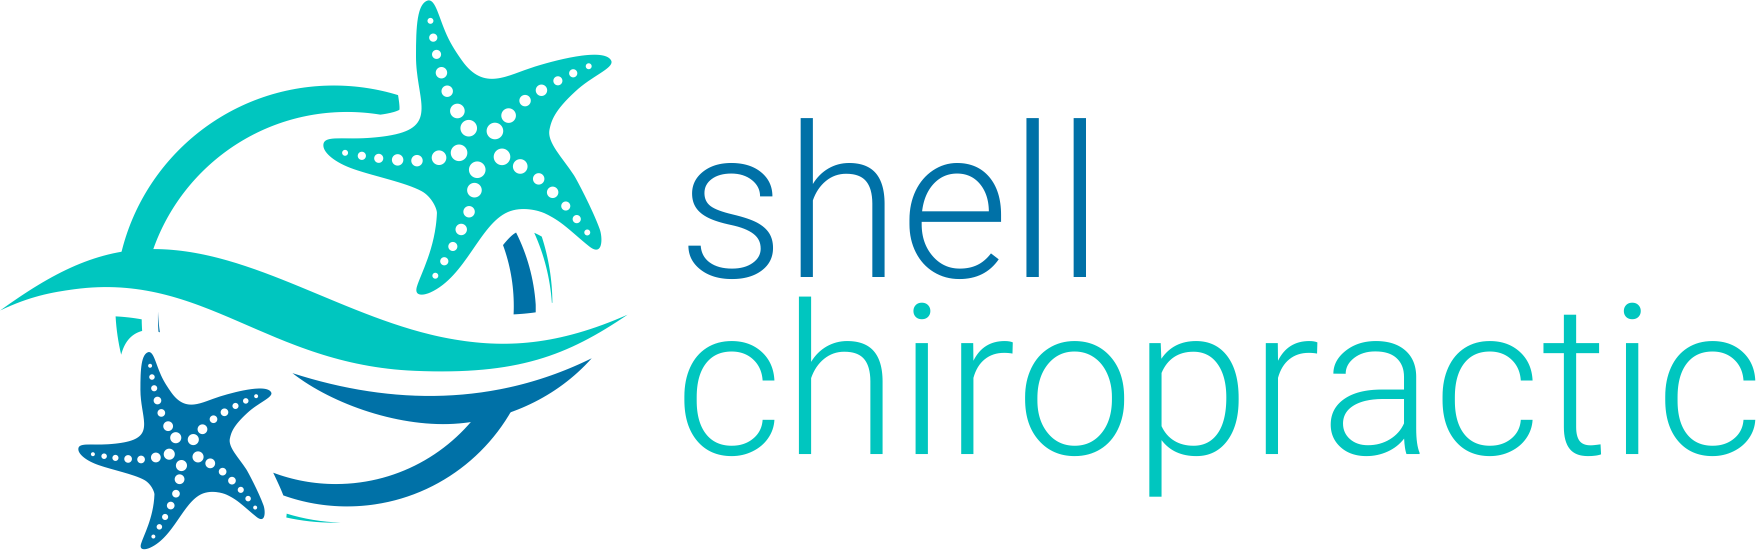 Shell Chiropractic